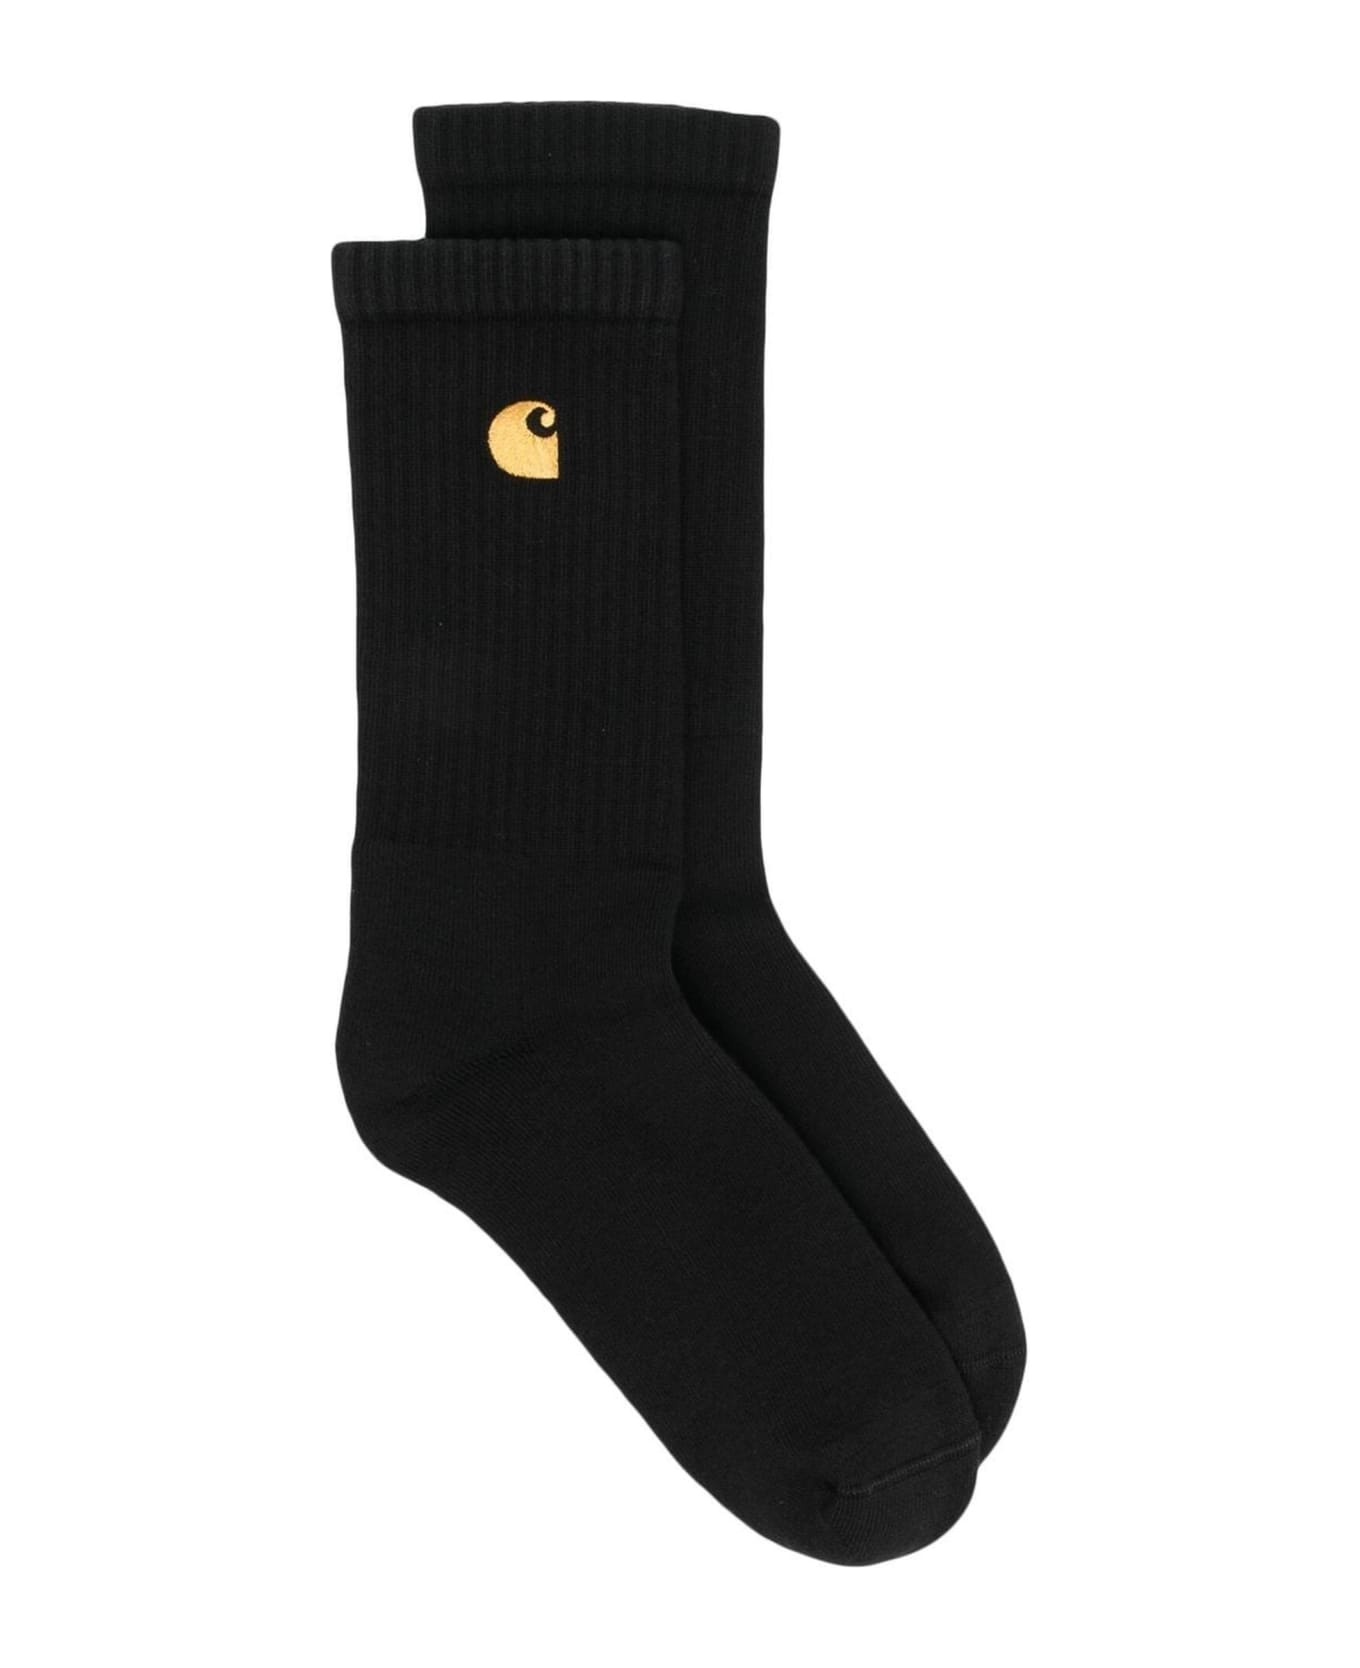 Black Cotton Blend Socks - 1